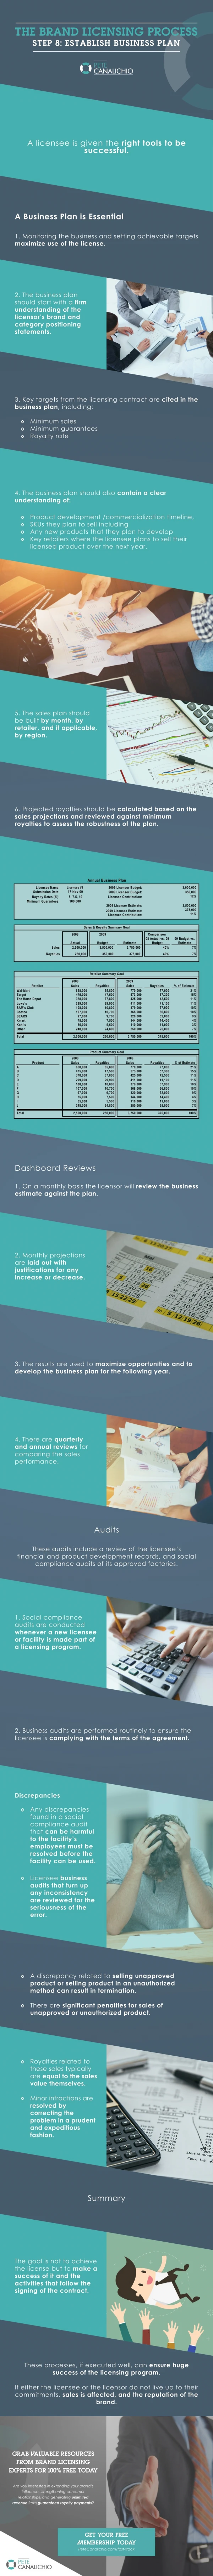 The Brand Licensing Process - Step 8: Establish Business Plan